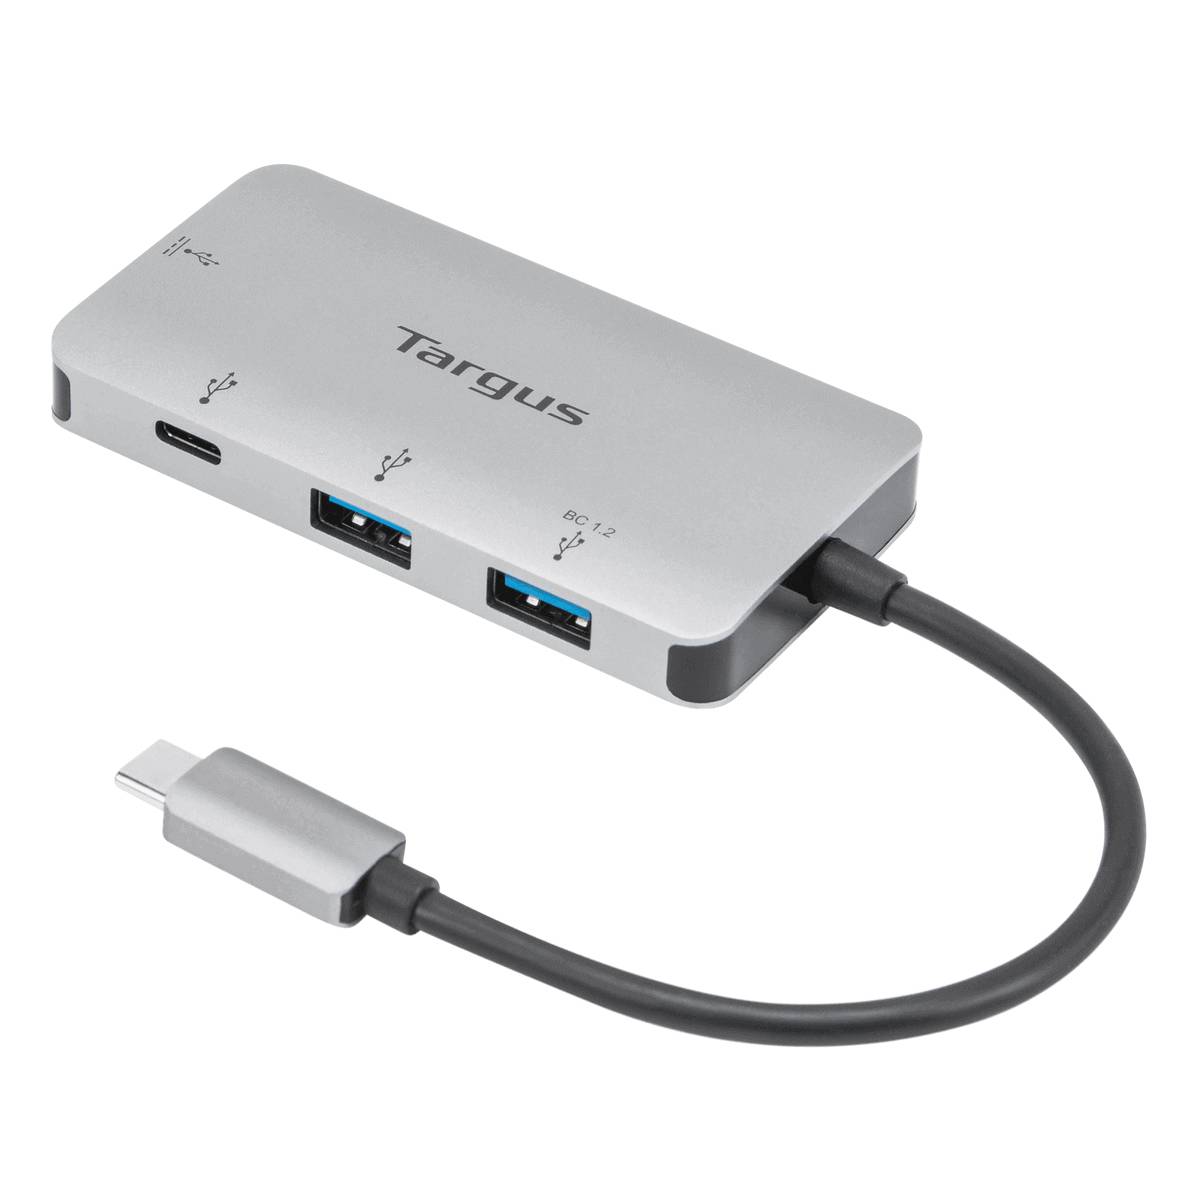 Rca Informatique - image du produit : TARGUS USB-C MULTI-PORT HUB WITH 2 X USB-A AND 2 X USB-C